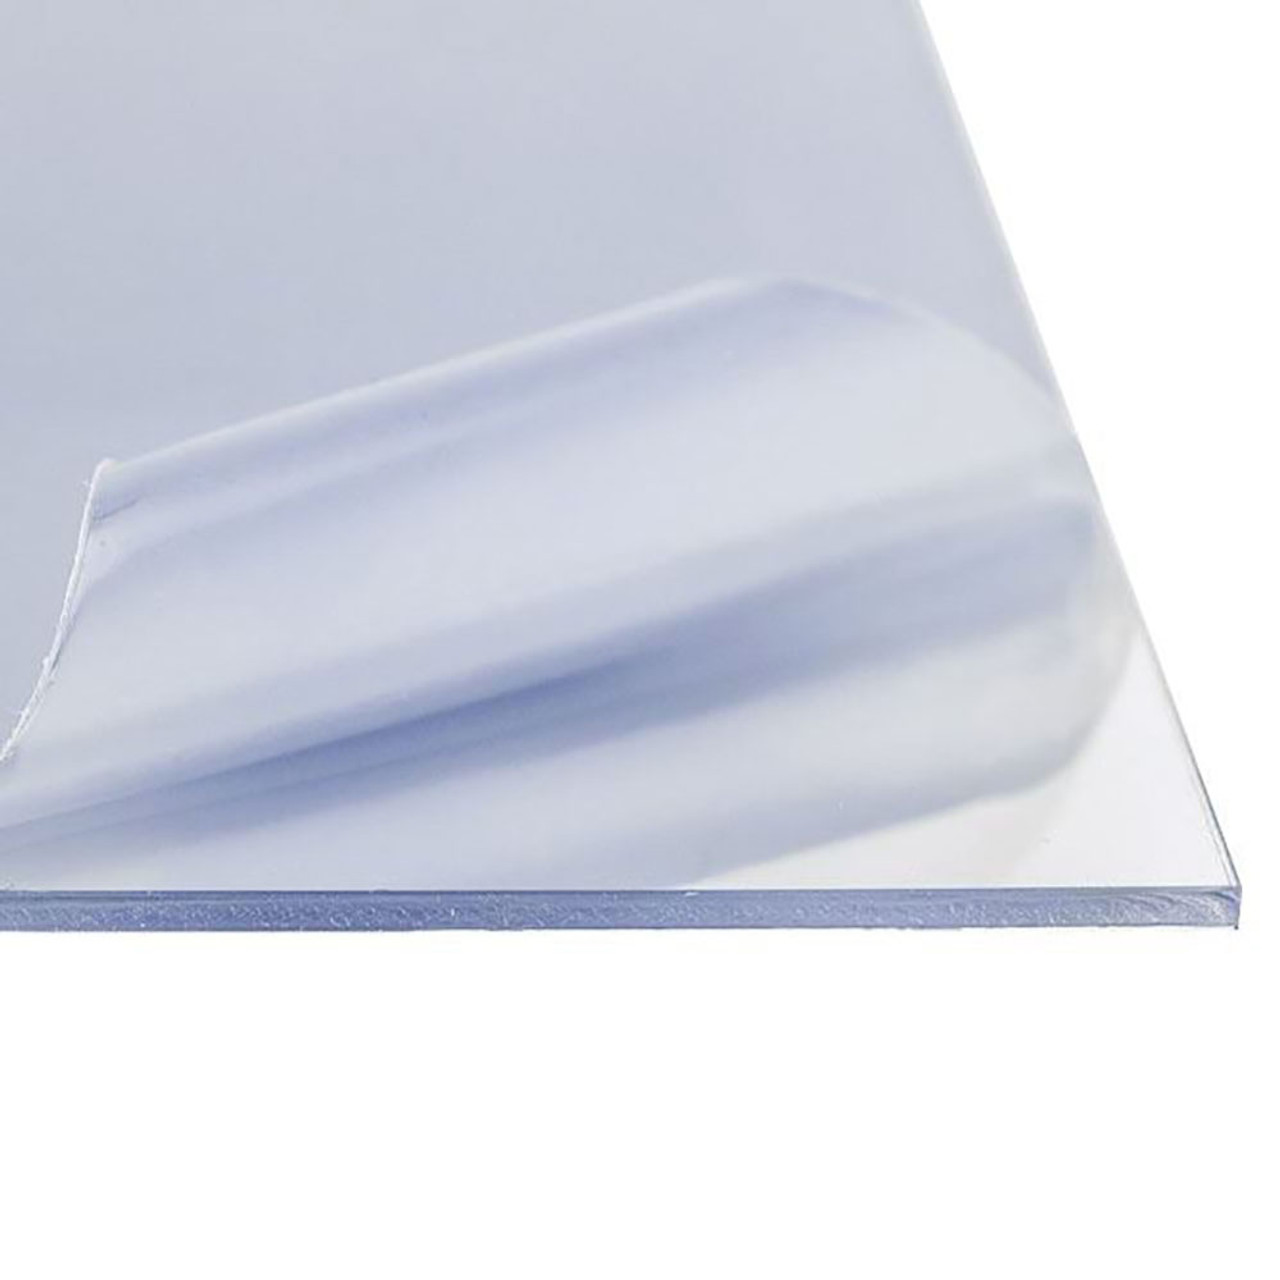 0.098" (1/10 inch) x 18" x 24", Acrylic, Plexiglass Plastic Sheet, Clear